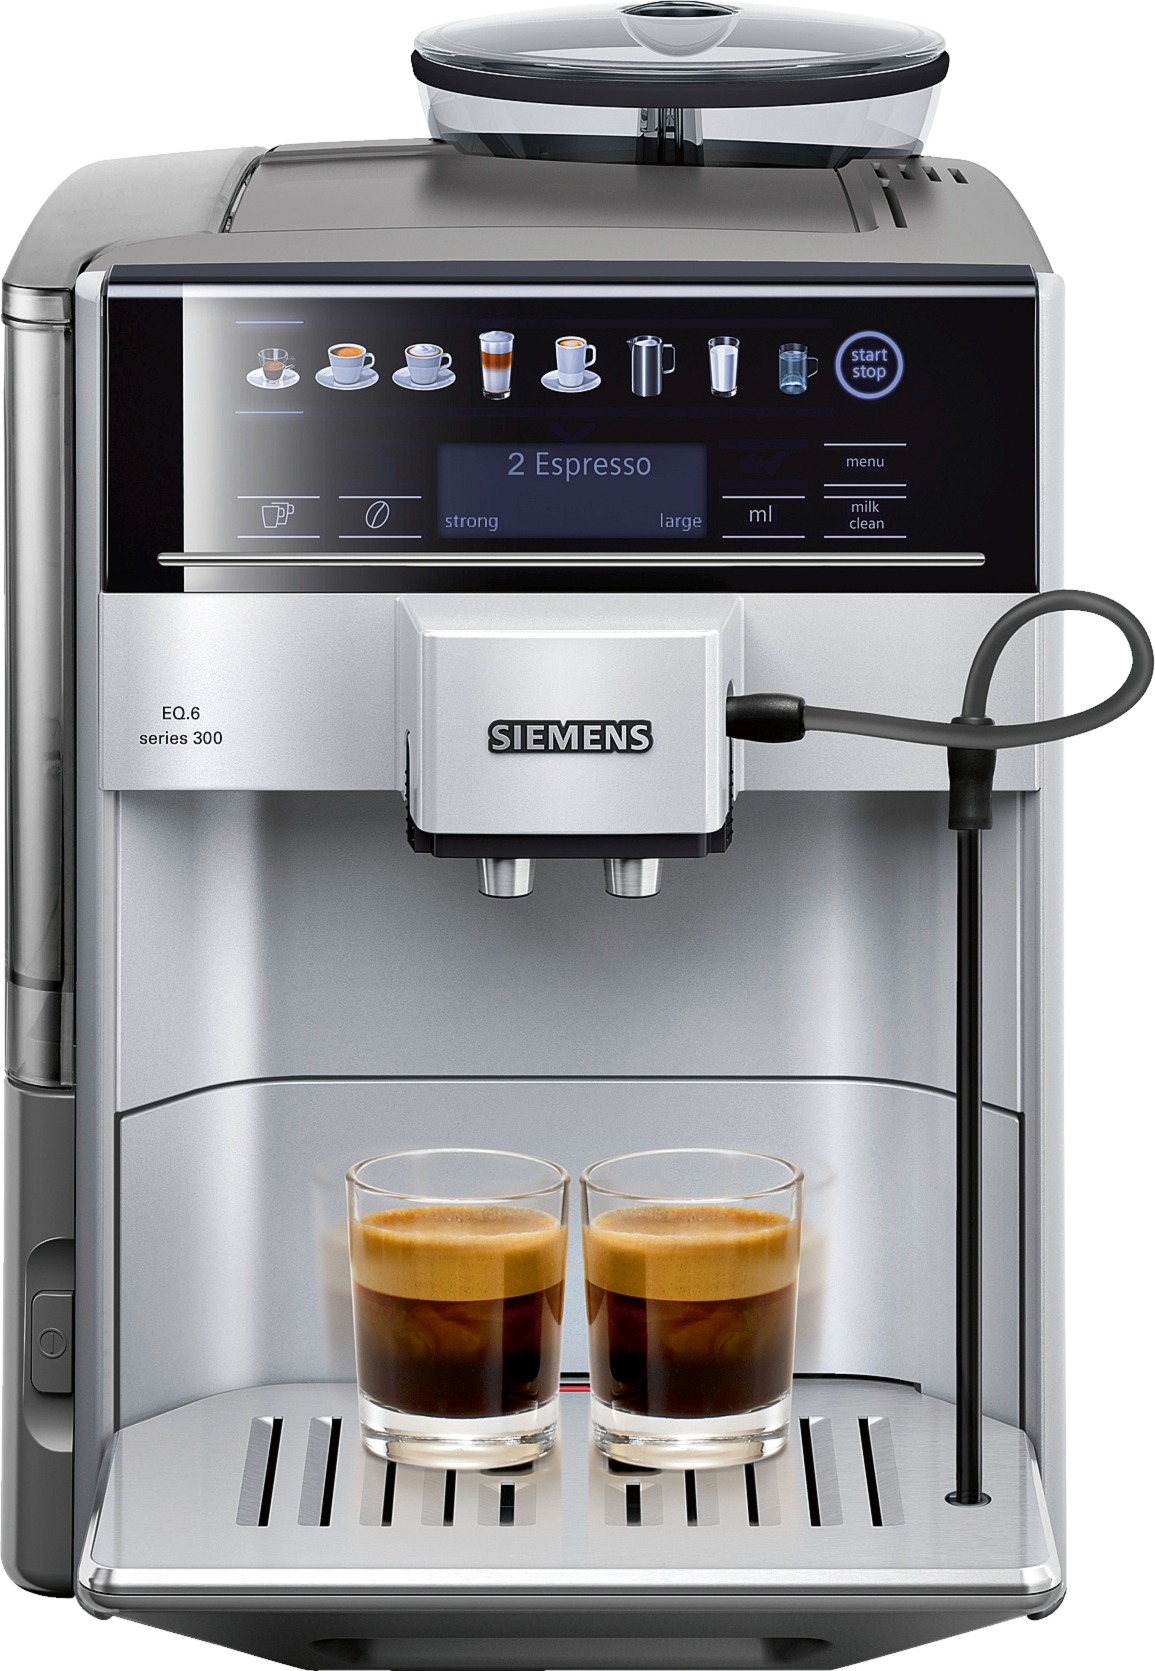 EQ.6 series 300 Tam otomatik espresso ve kahve makinesi